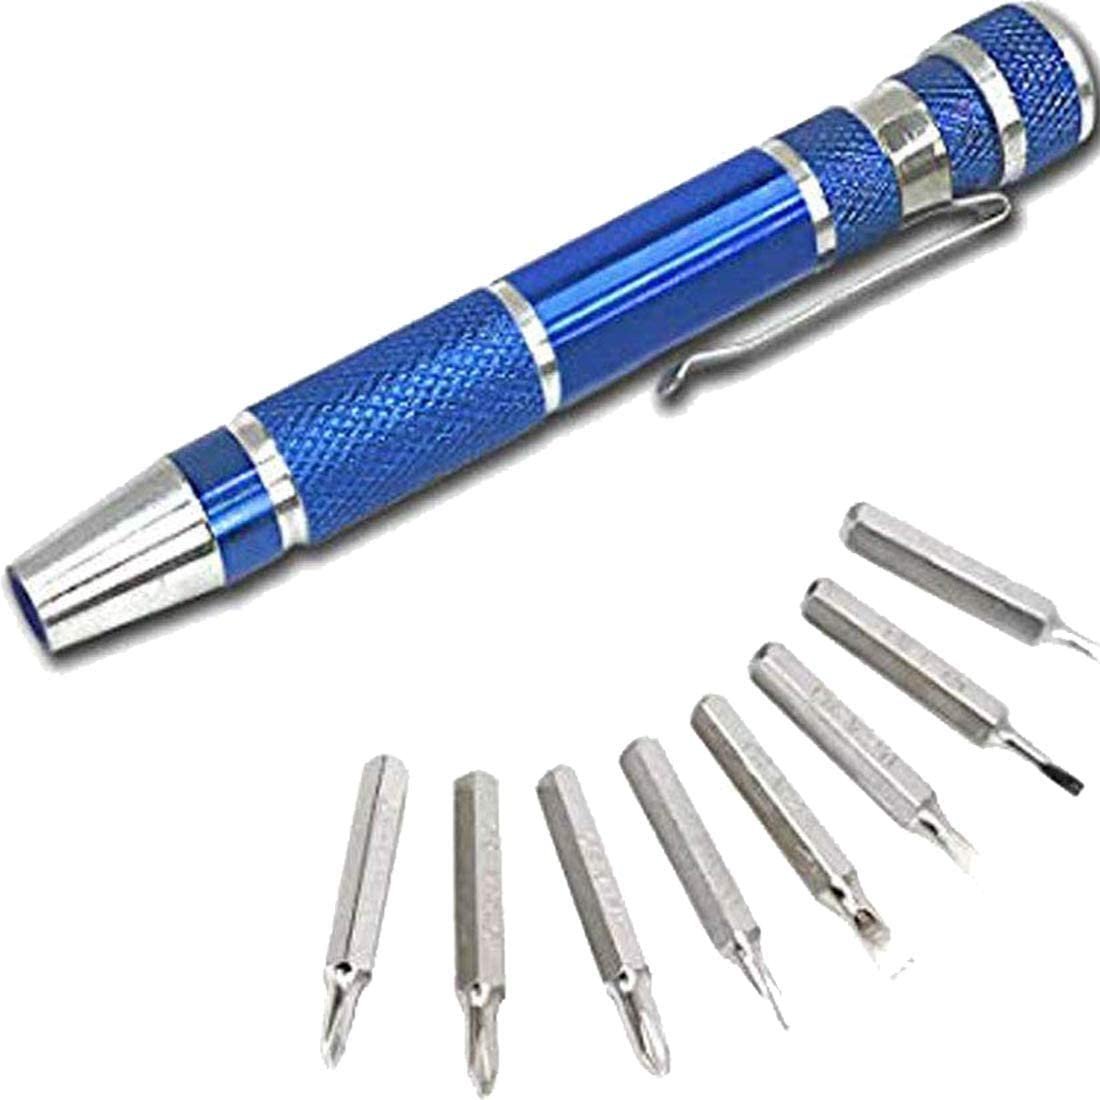 Kuma Pen Tool Kit 8-In-1 Precision Pocket Screwdriver Set